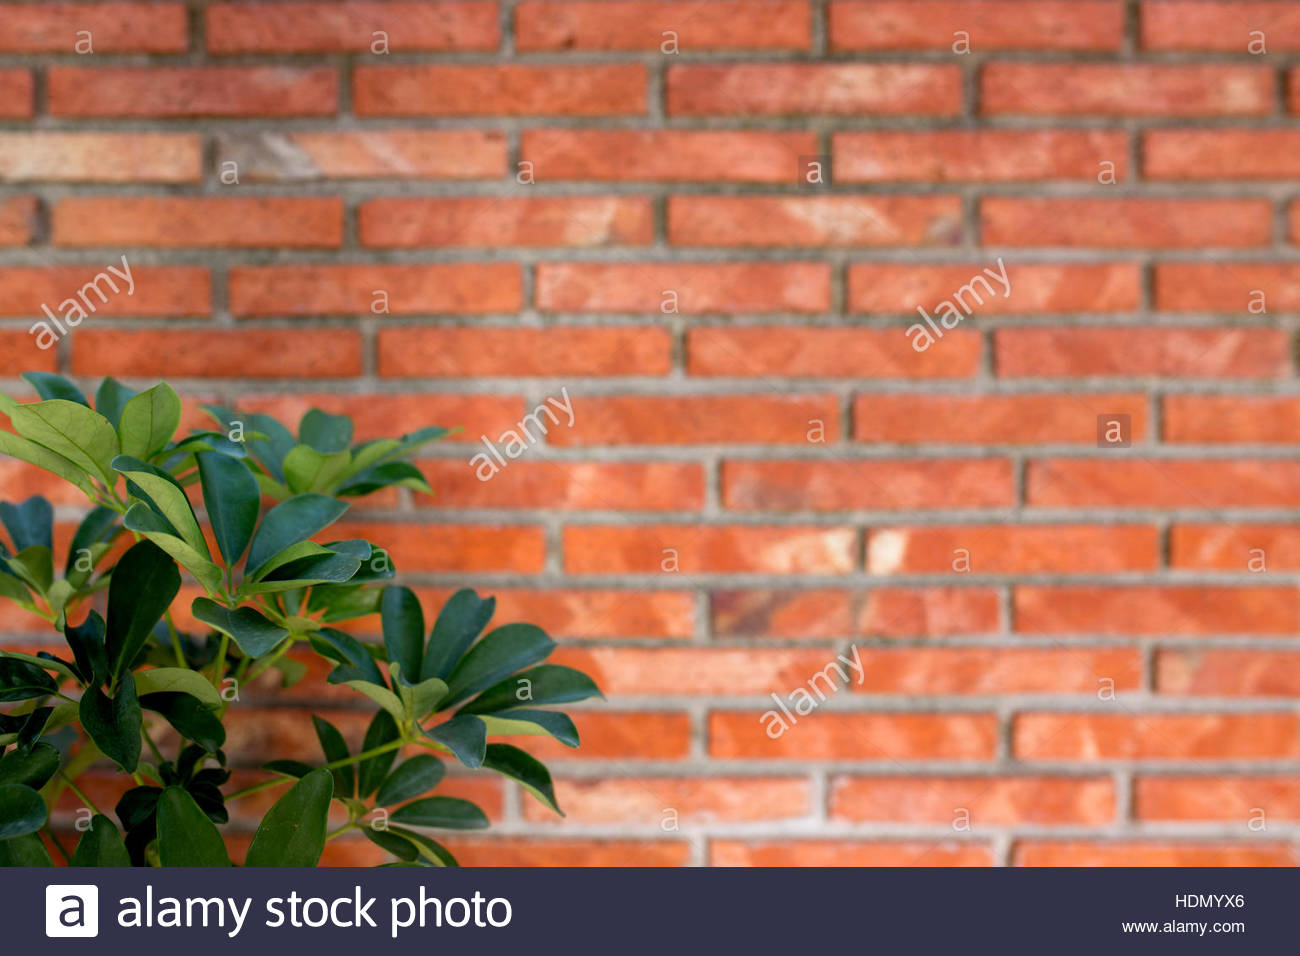 Green Mediterranean Plant Blurred Brick Wall In Background Stock